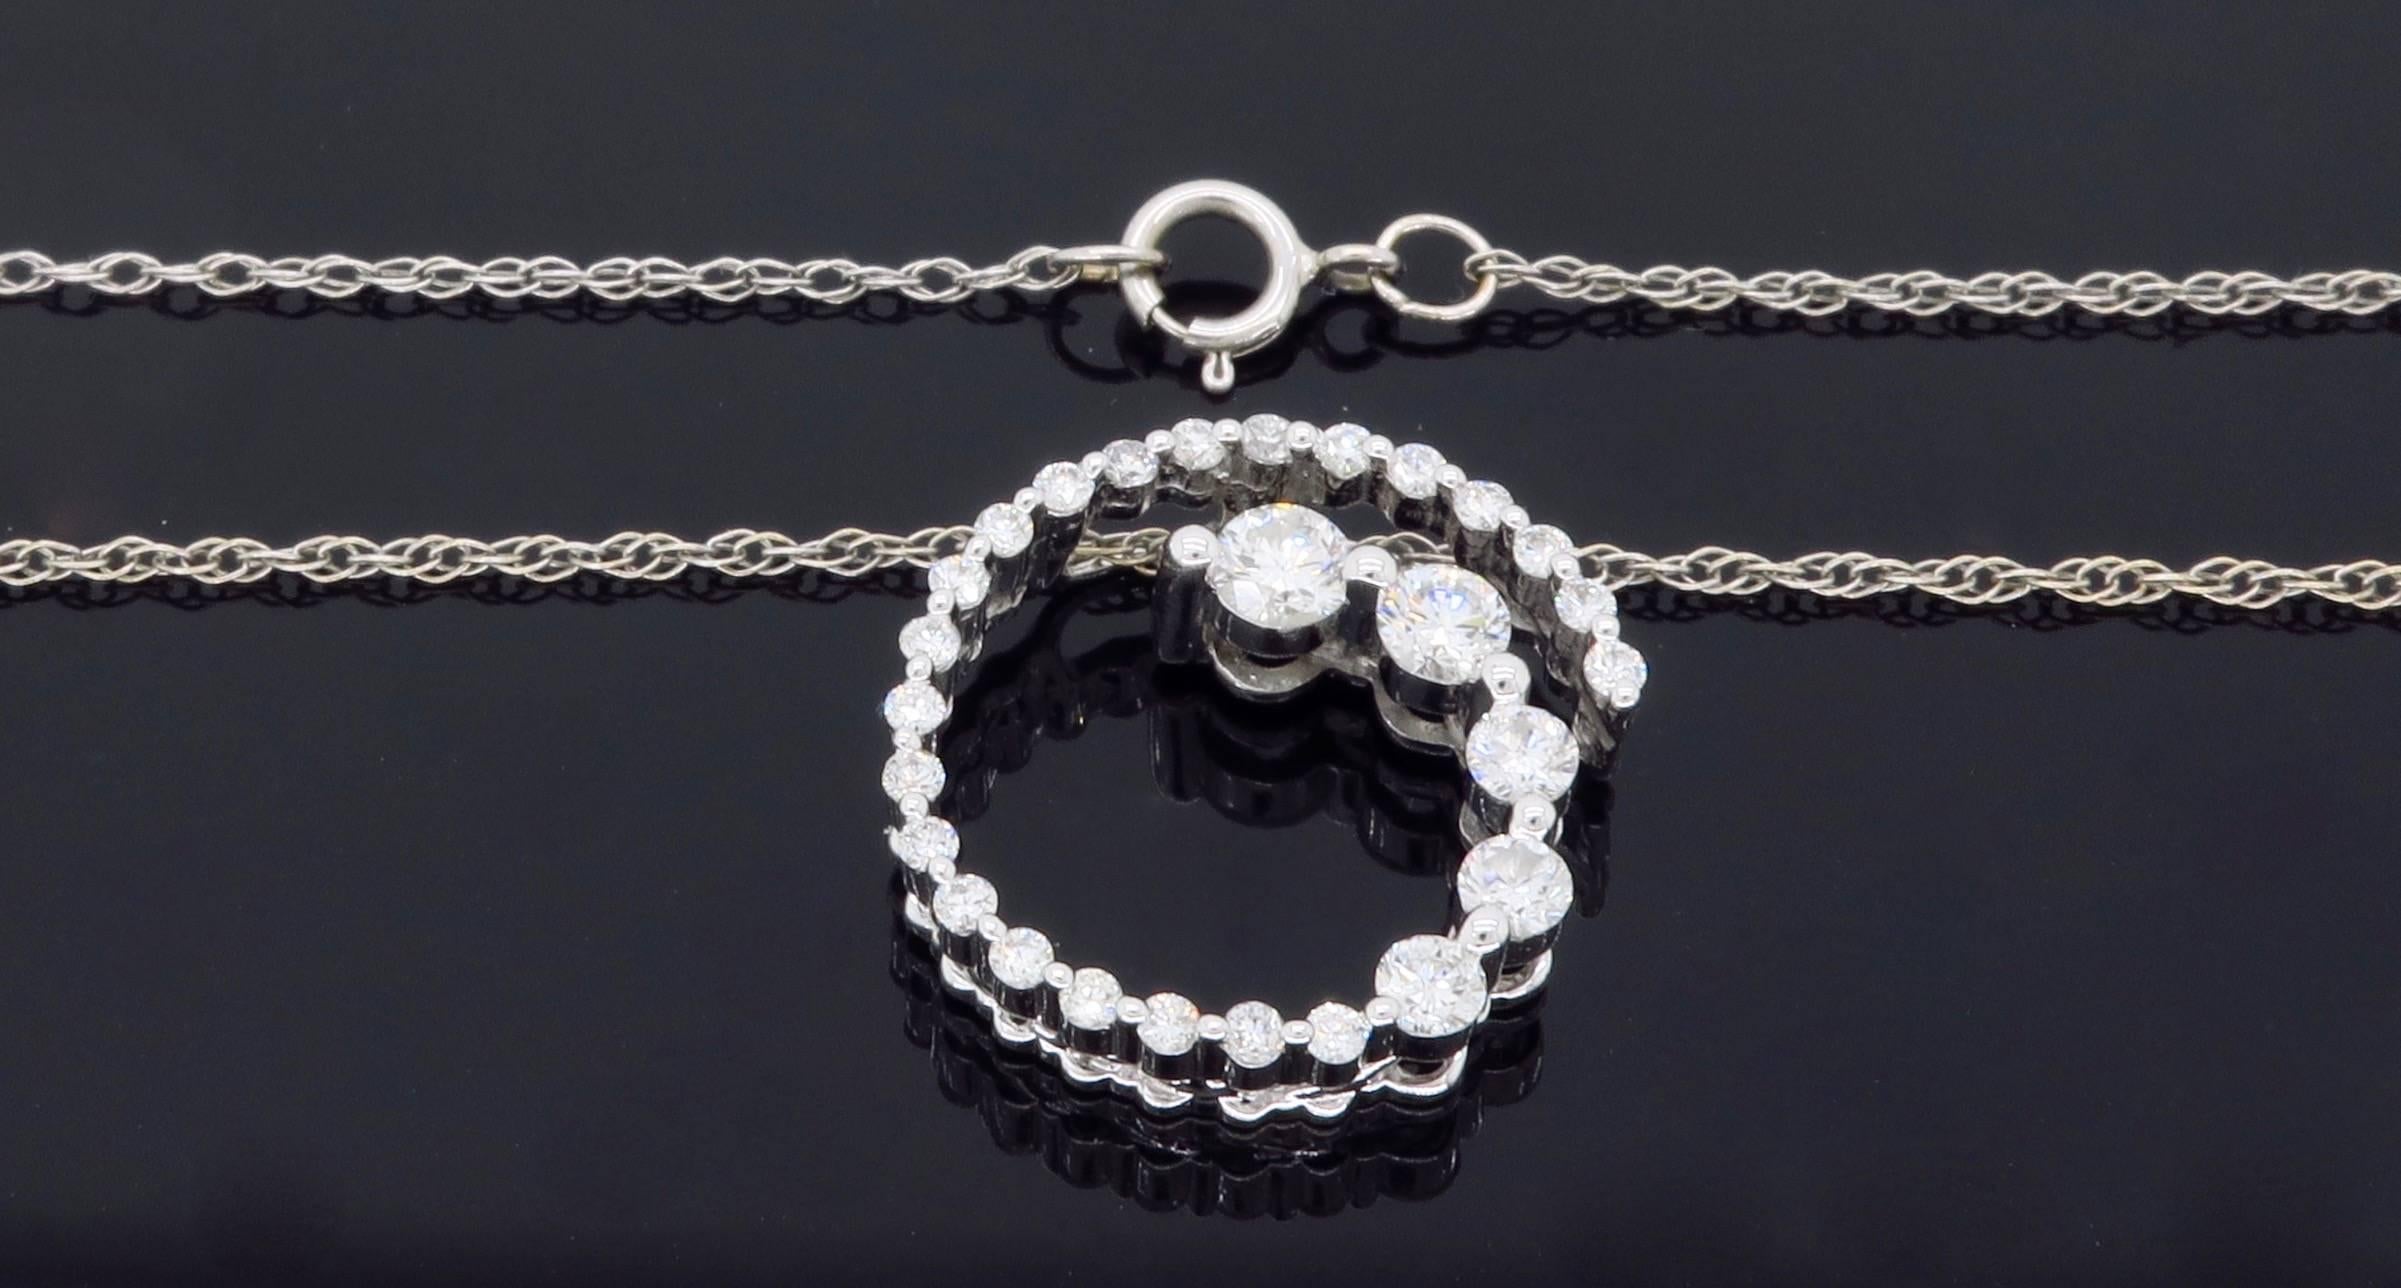  Diamond White Gold Pendant Chain Necklace  3